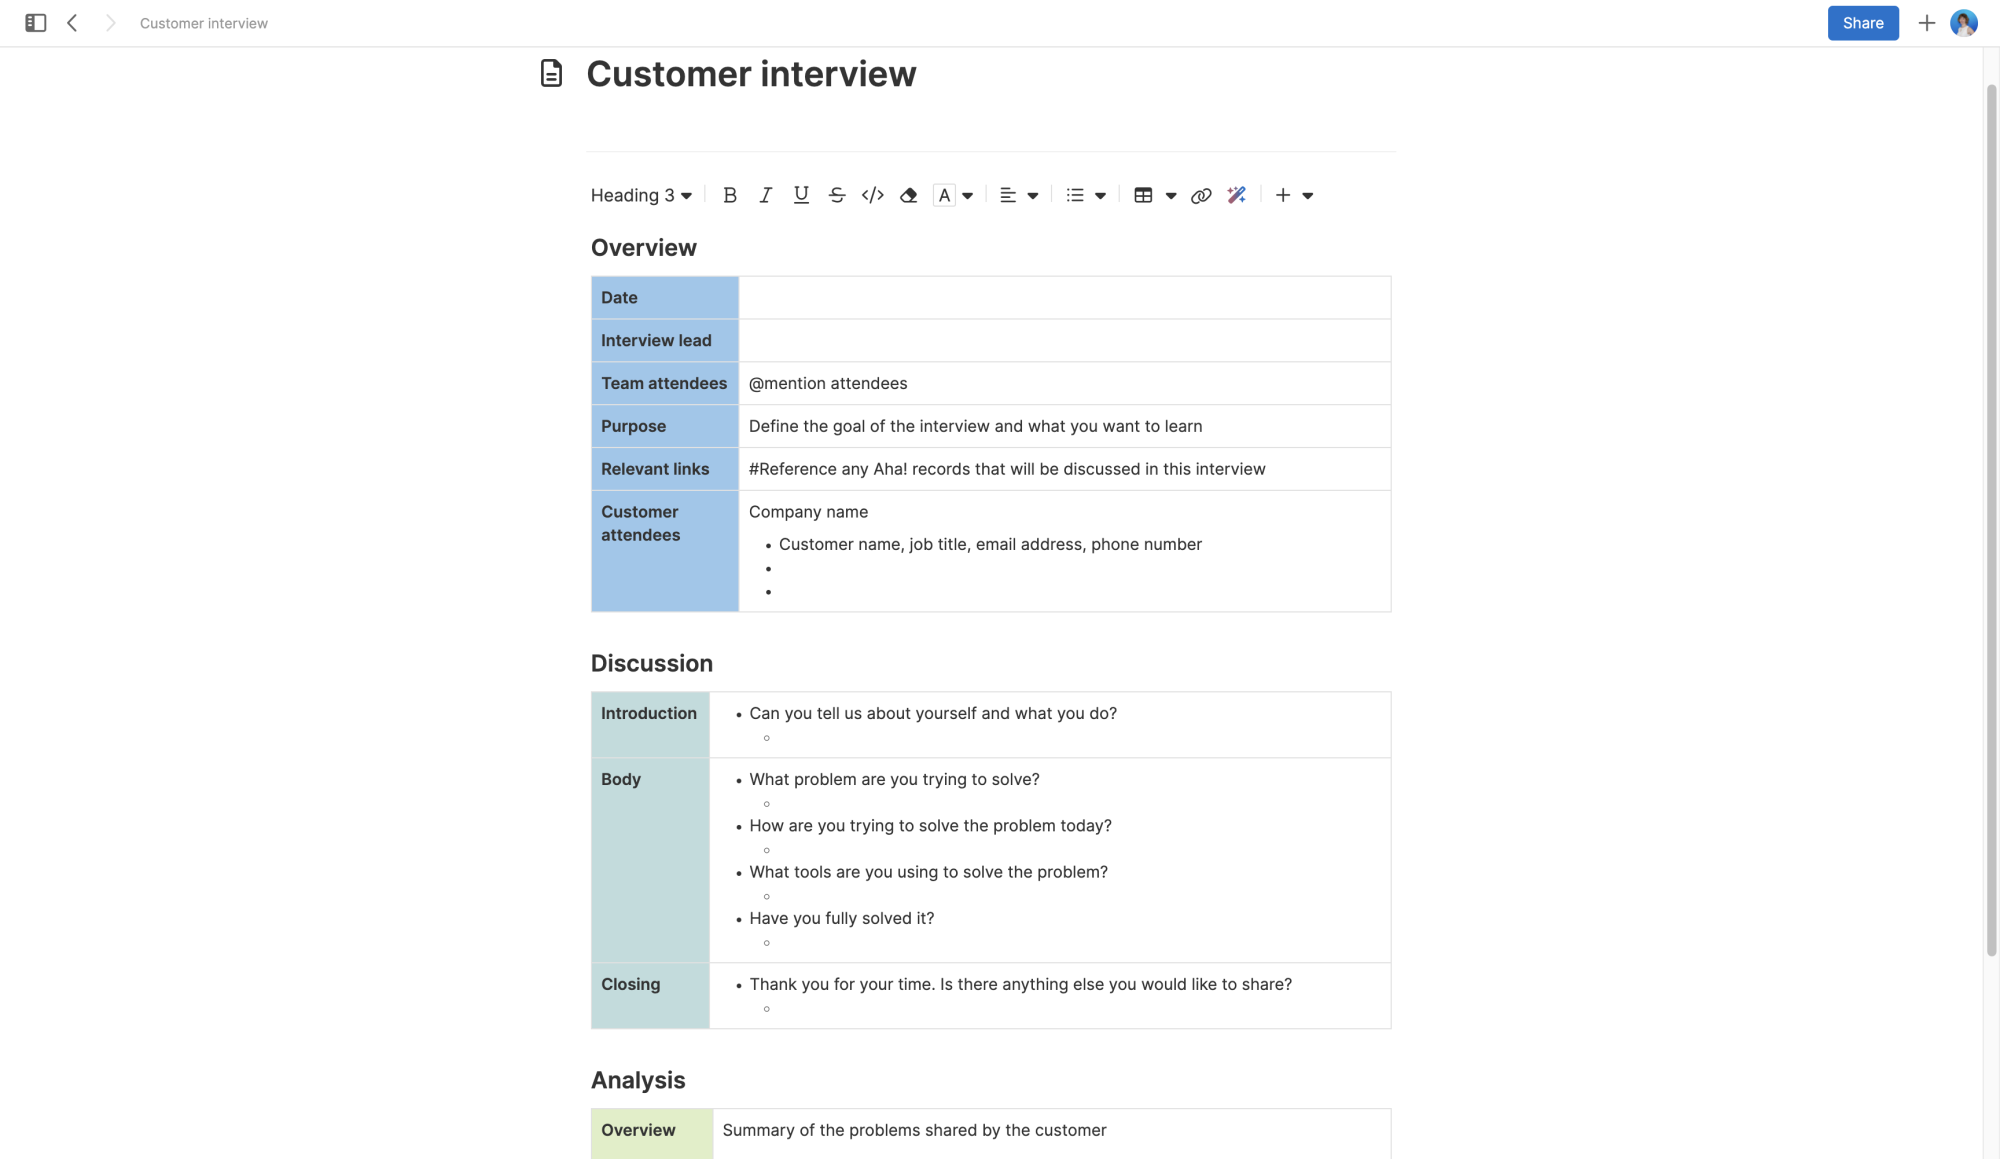 Customer interview